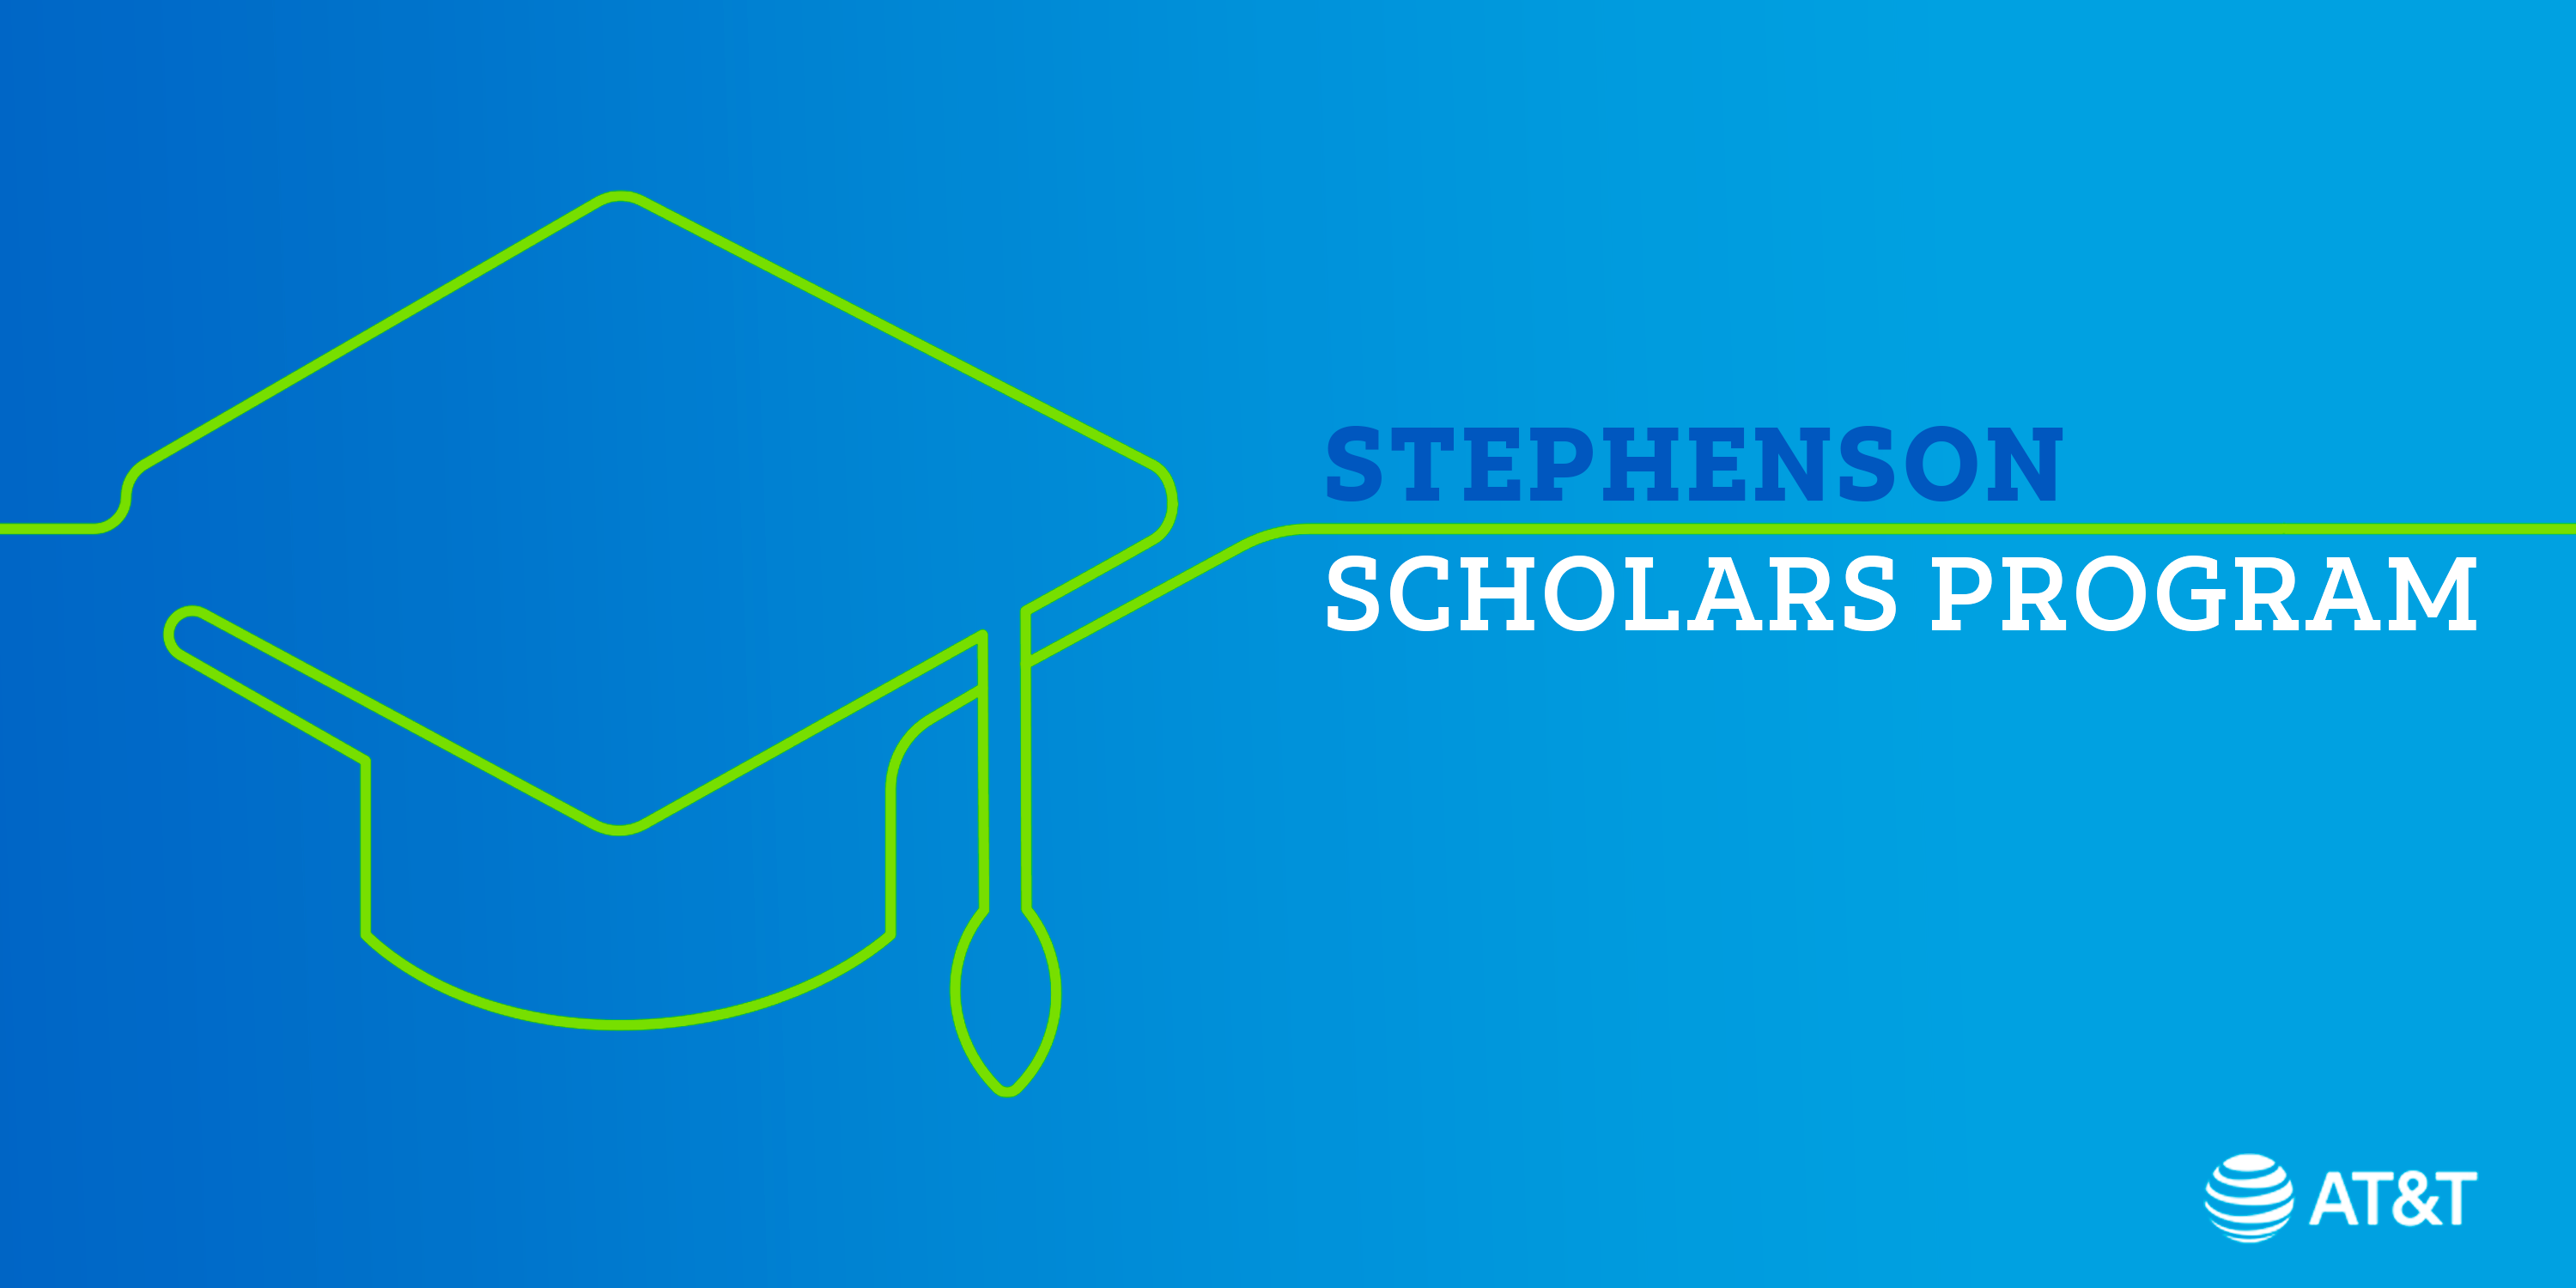 Stephenson Scholars Program